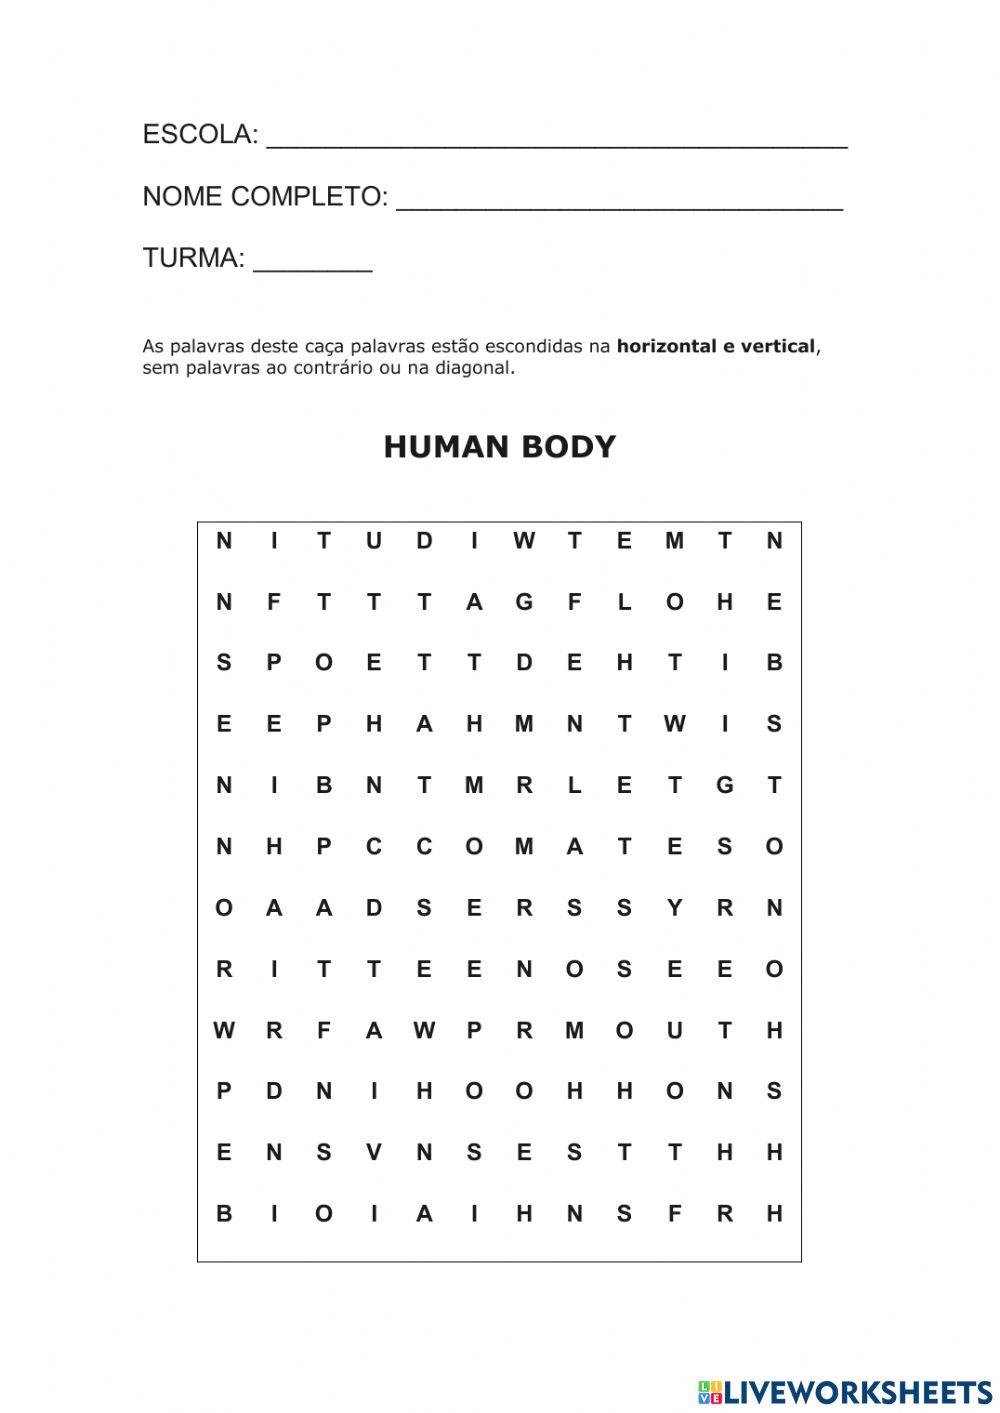 HUMAN BODY - Imprimir Caça Palavras